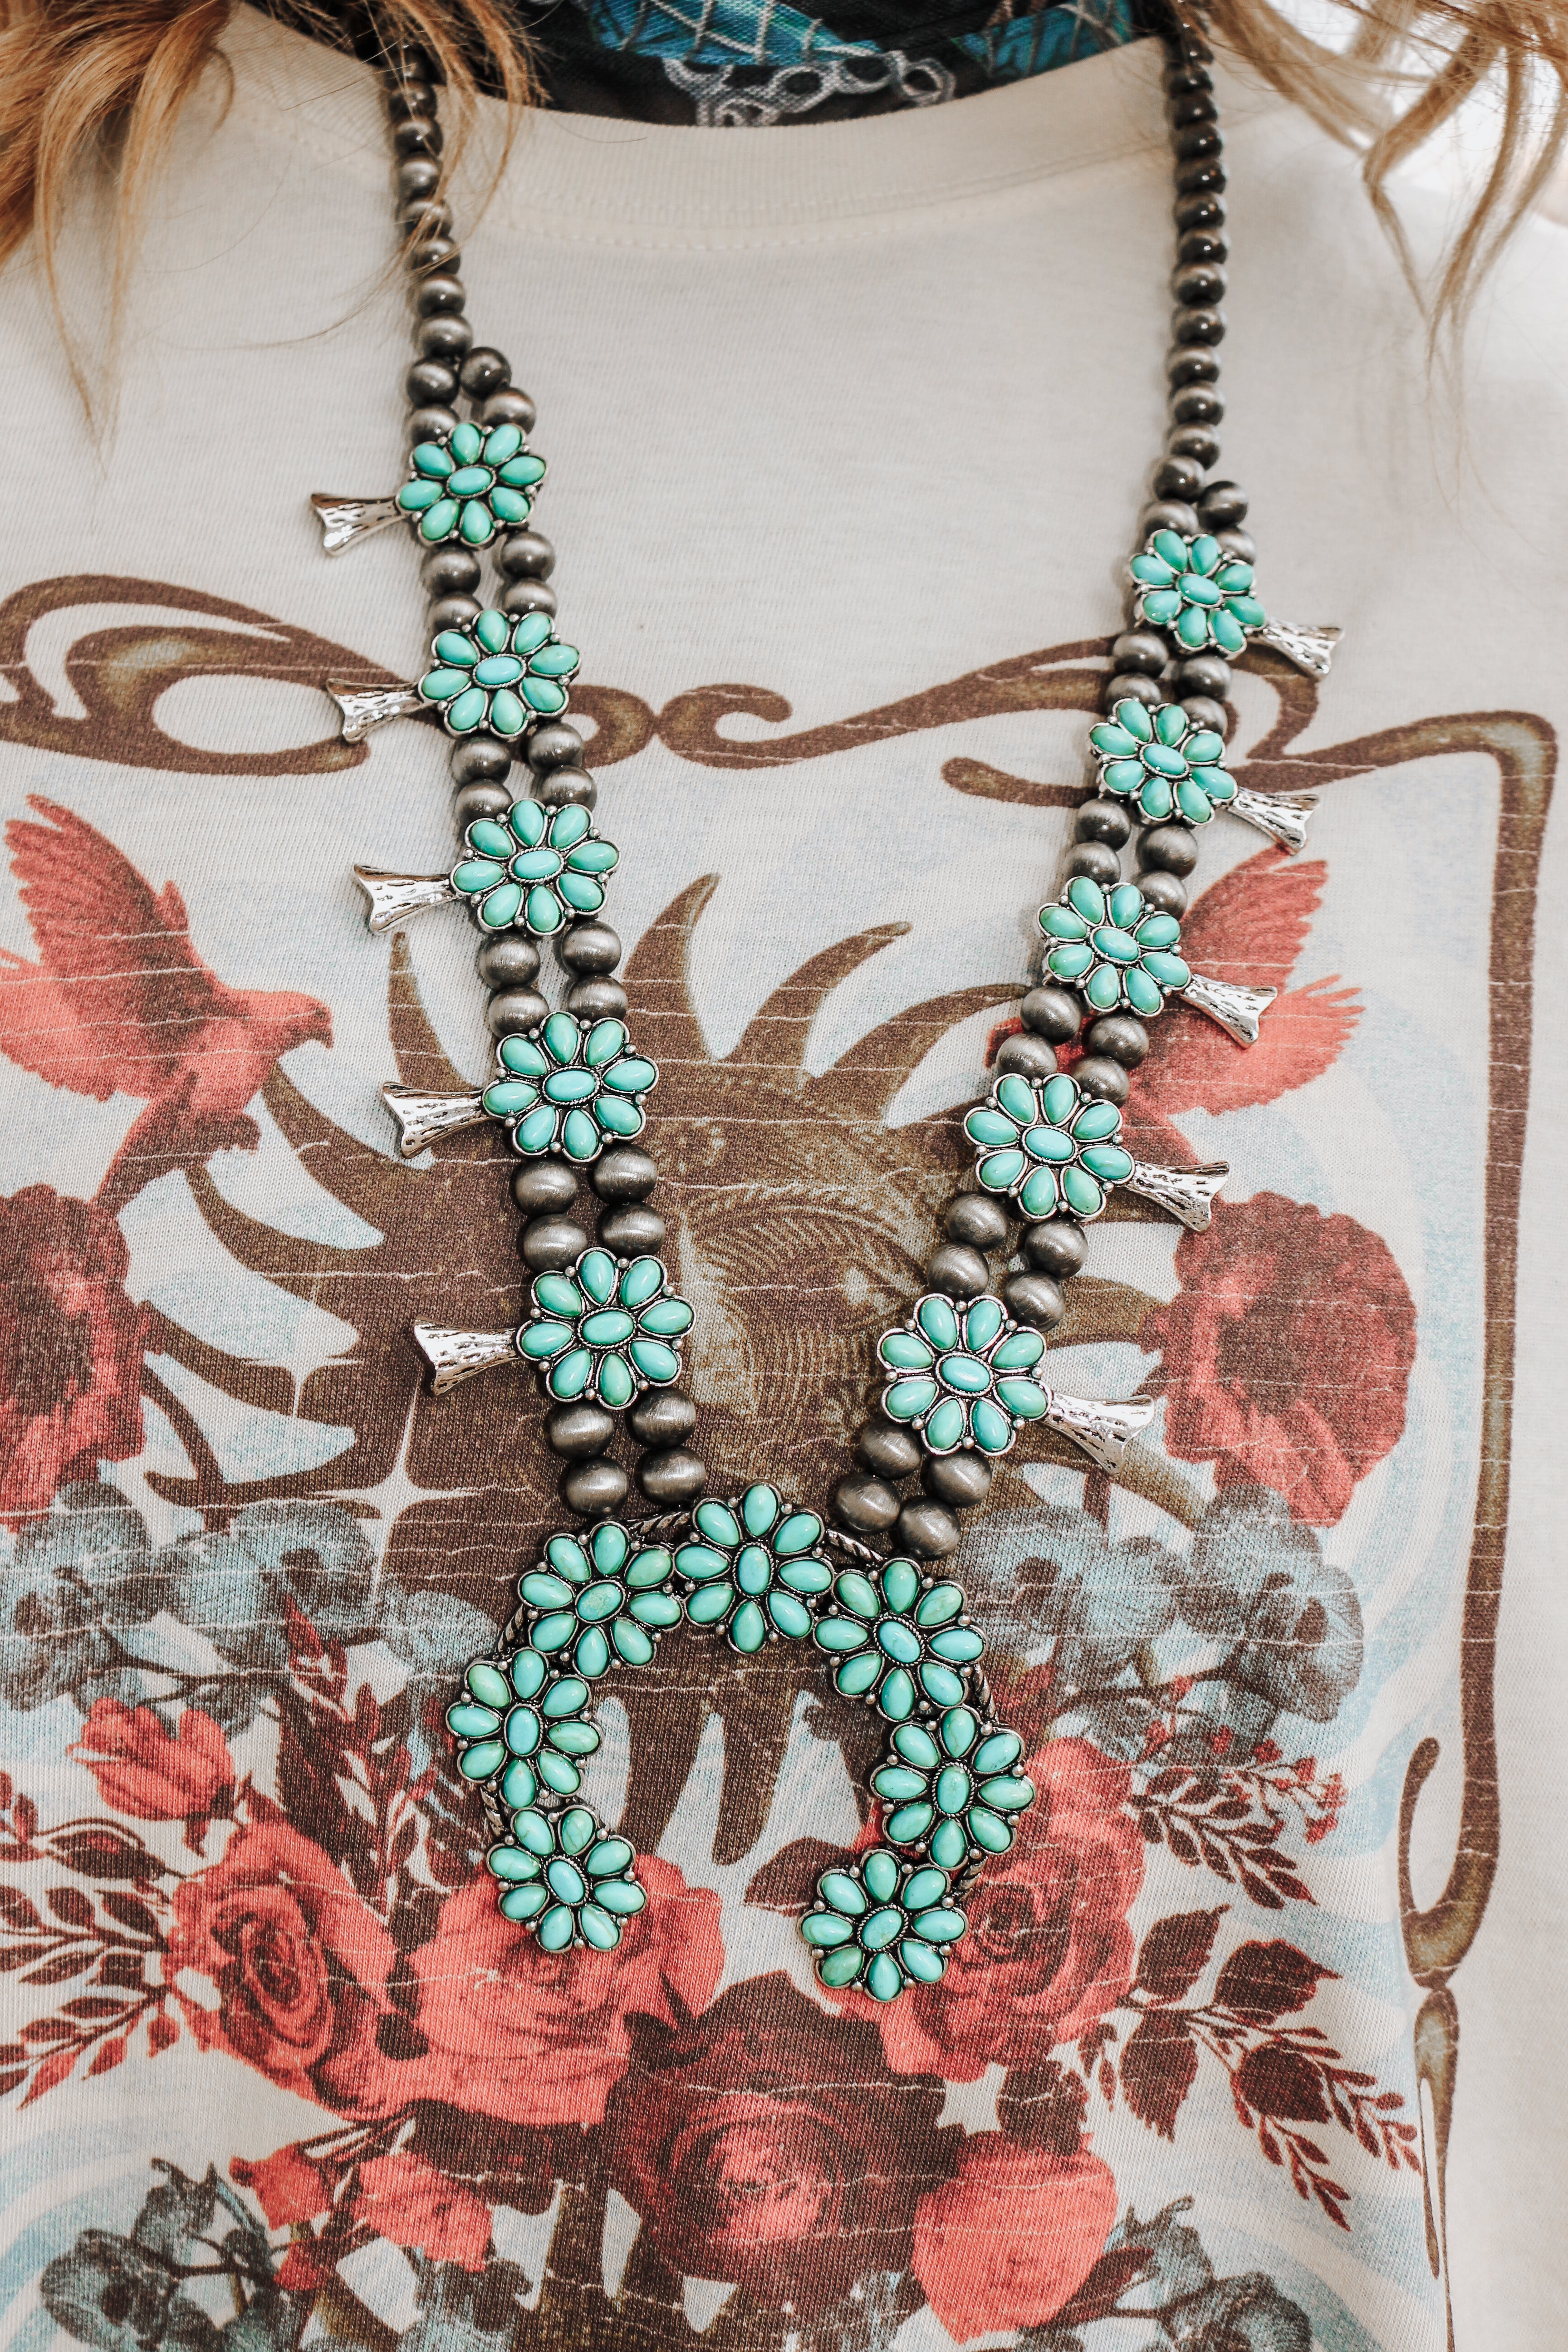 Amazon.com: Jojomina Western Turquoise Jewelry for Women Handmade Necklaces  Earrings 10PCs: Clothing, Shoes & Jewelry